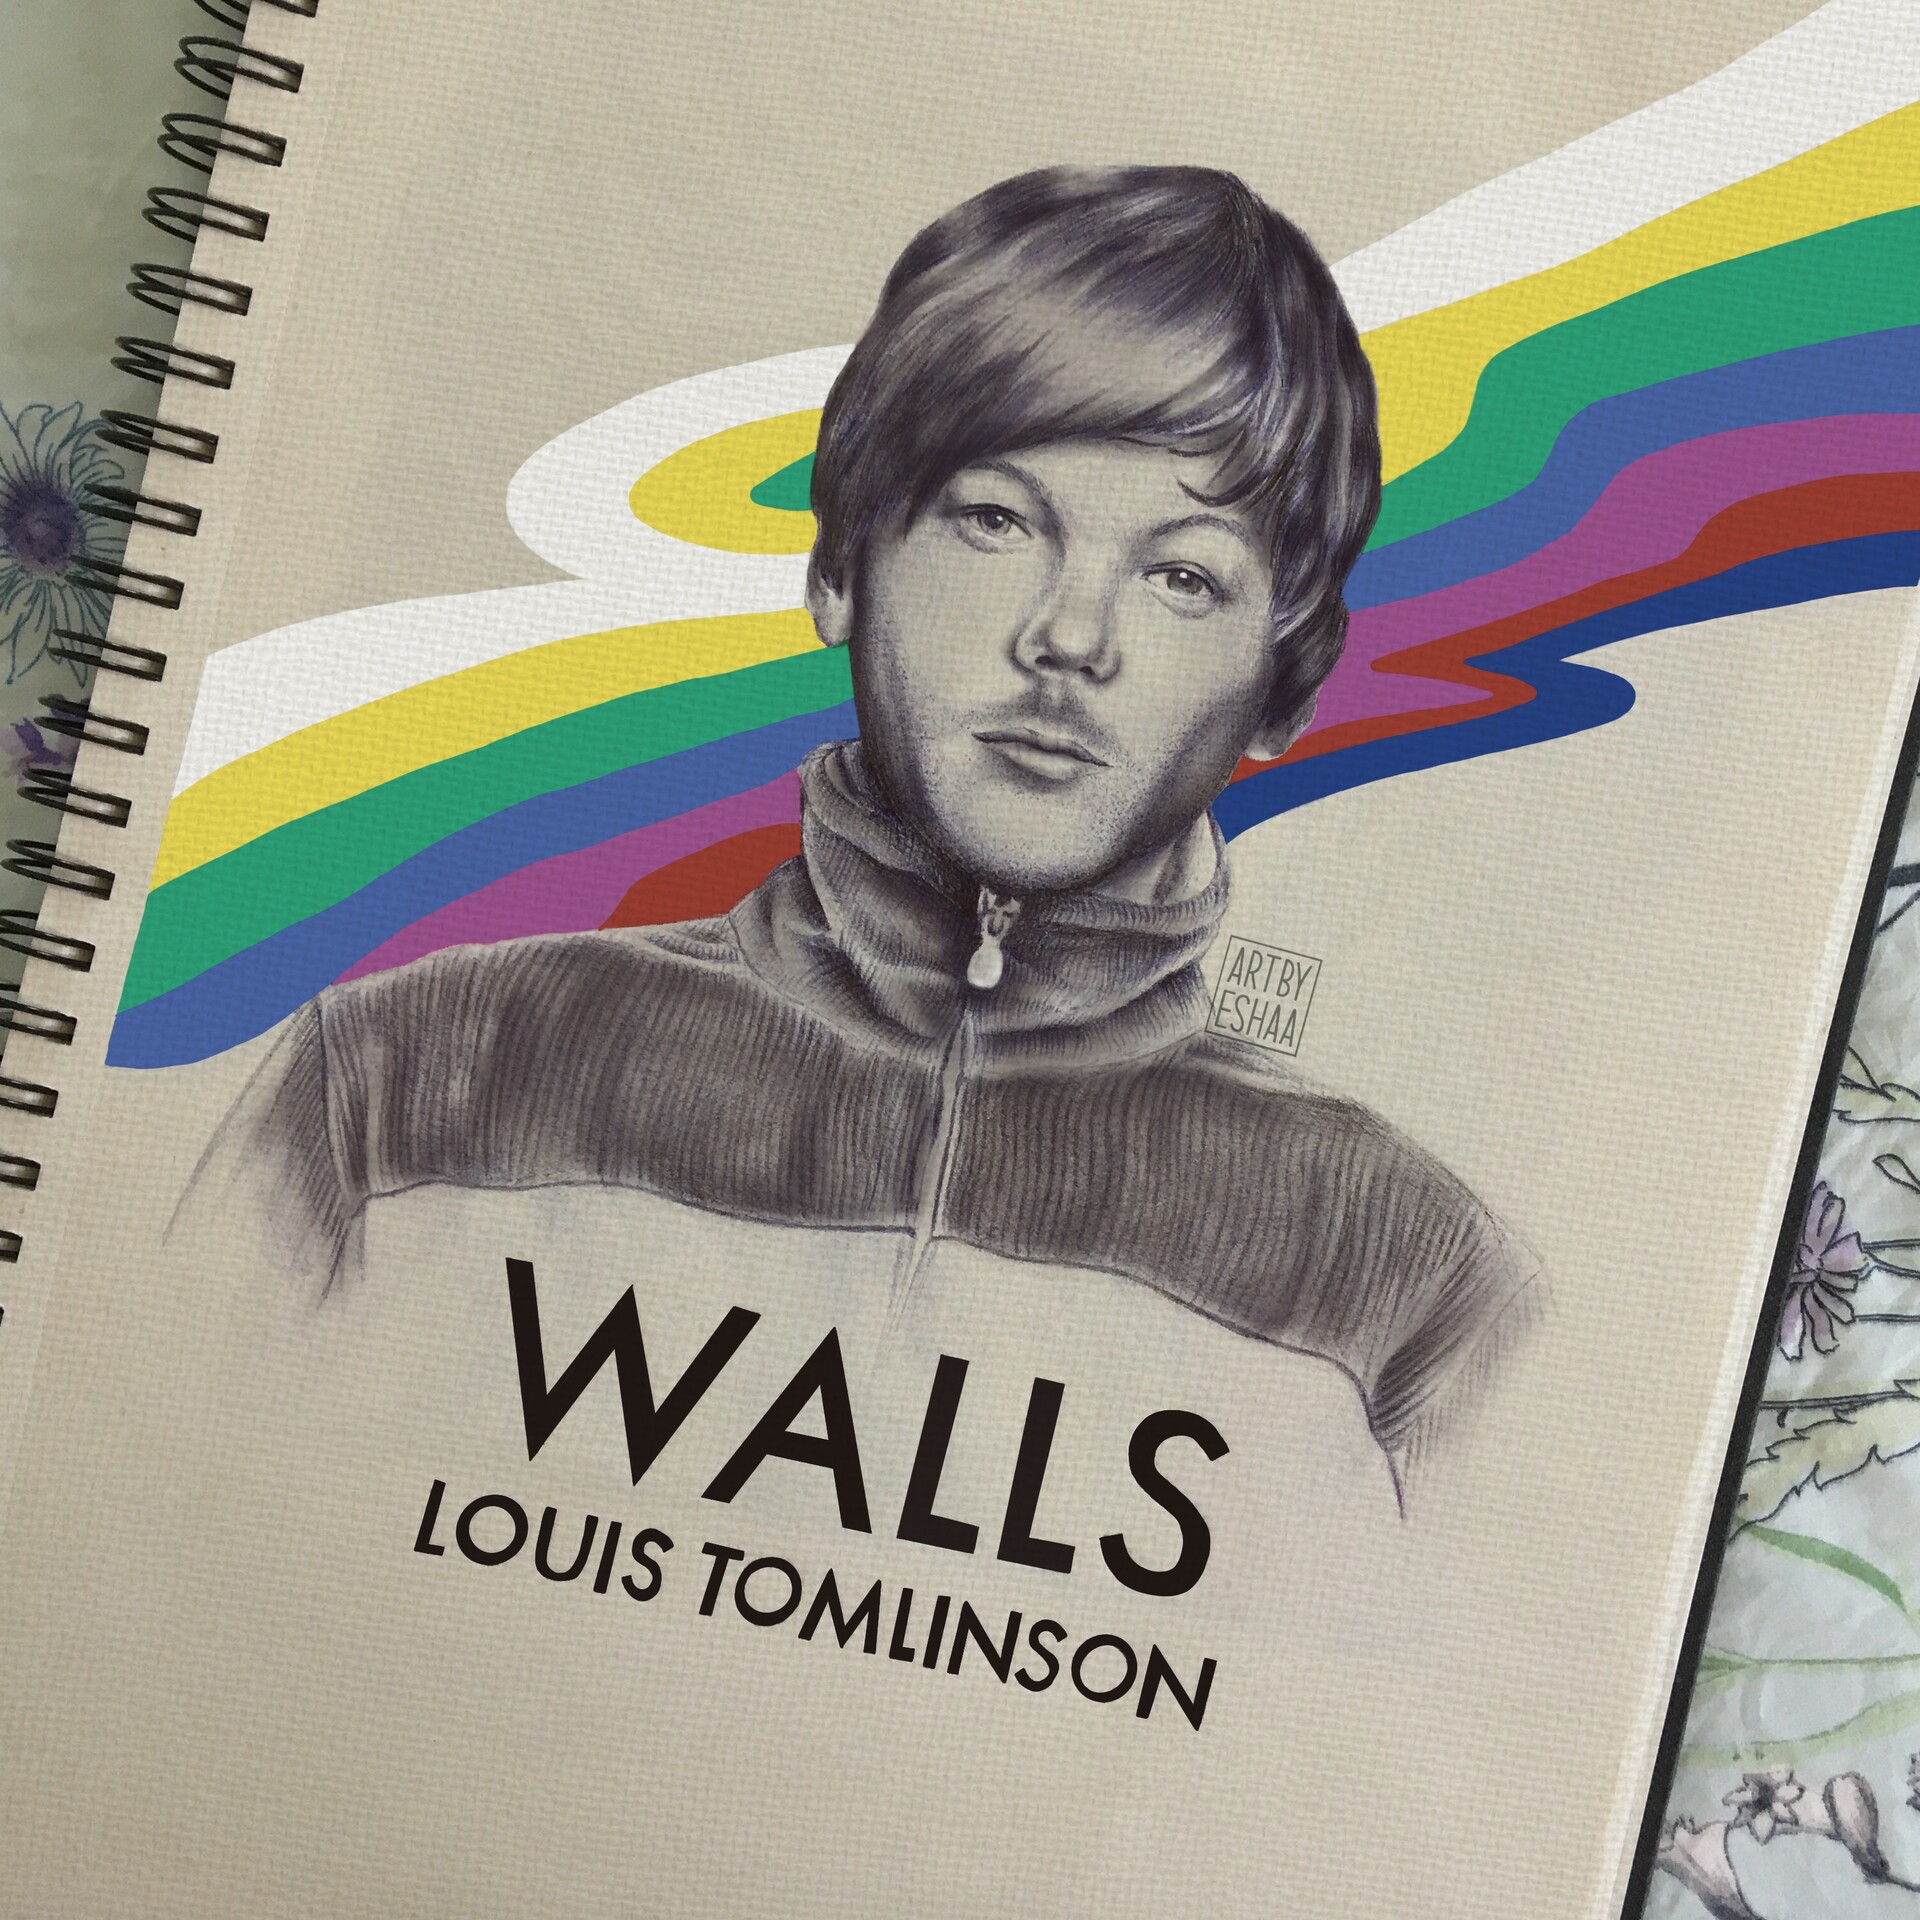 Louis Tomlinson: Breaking down walls